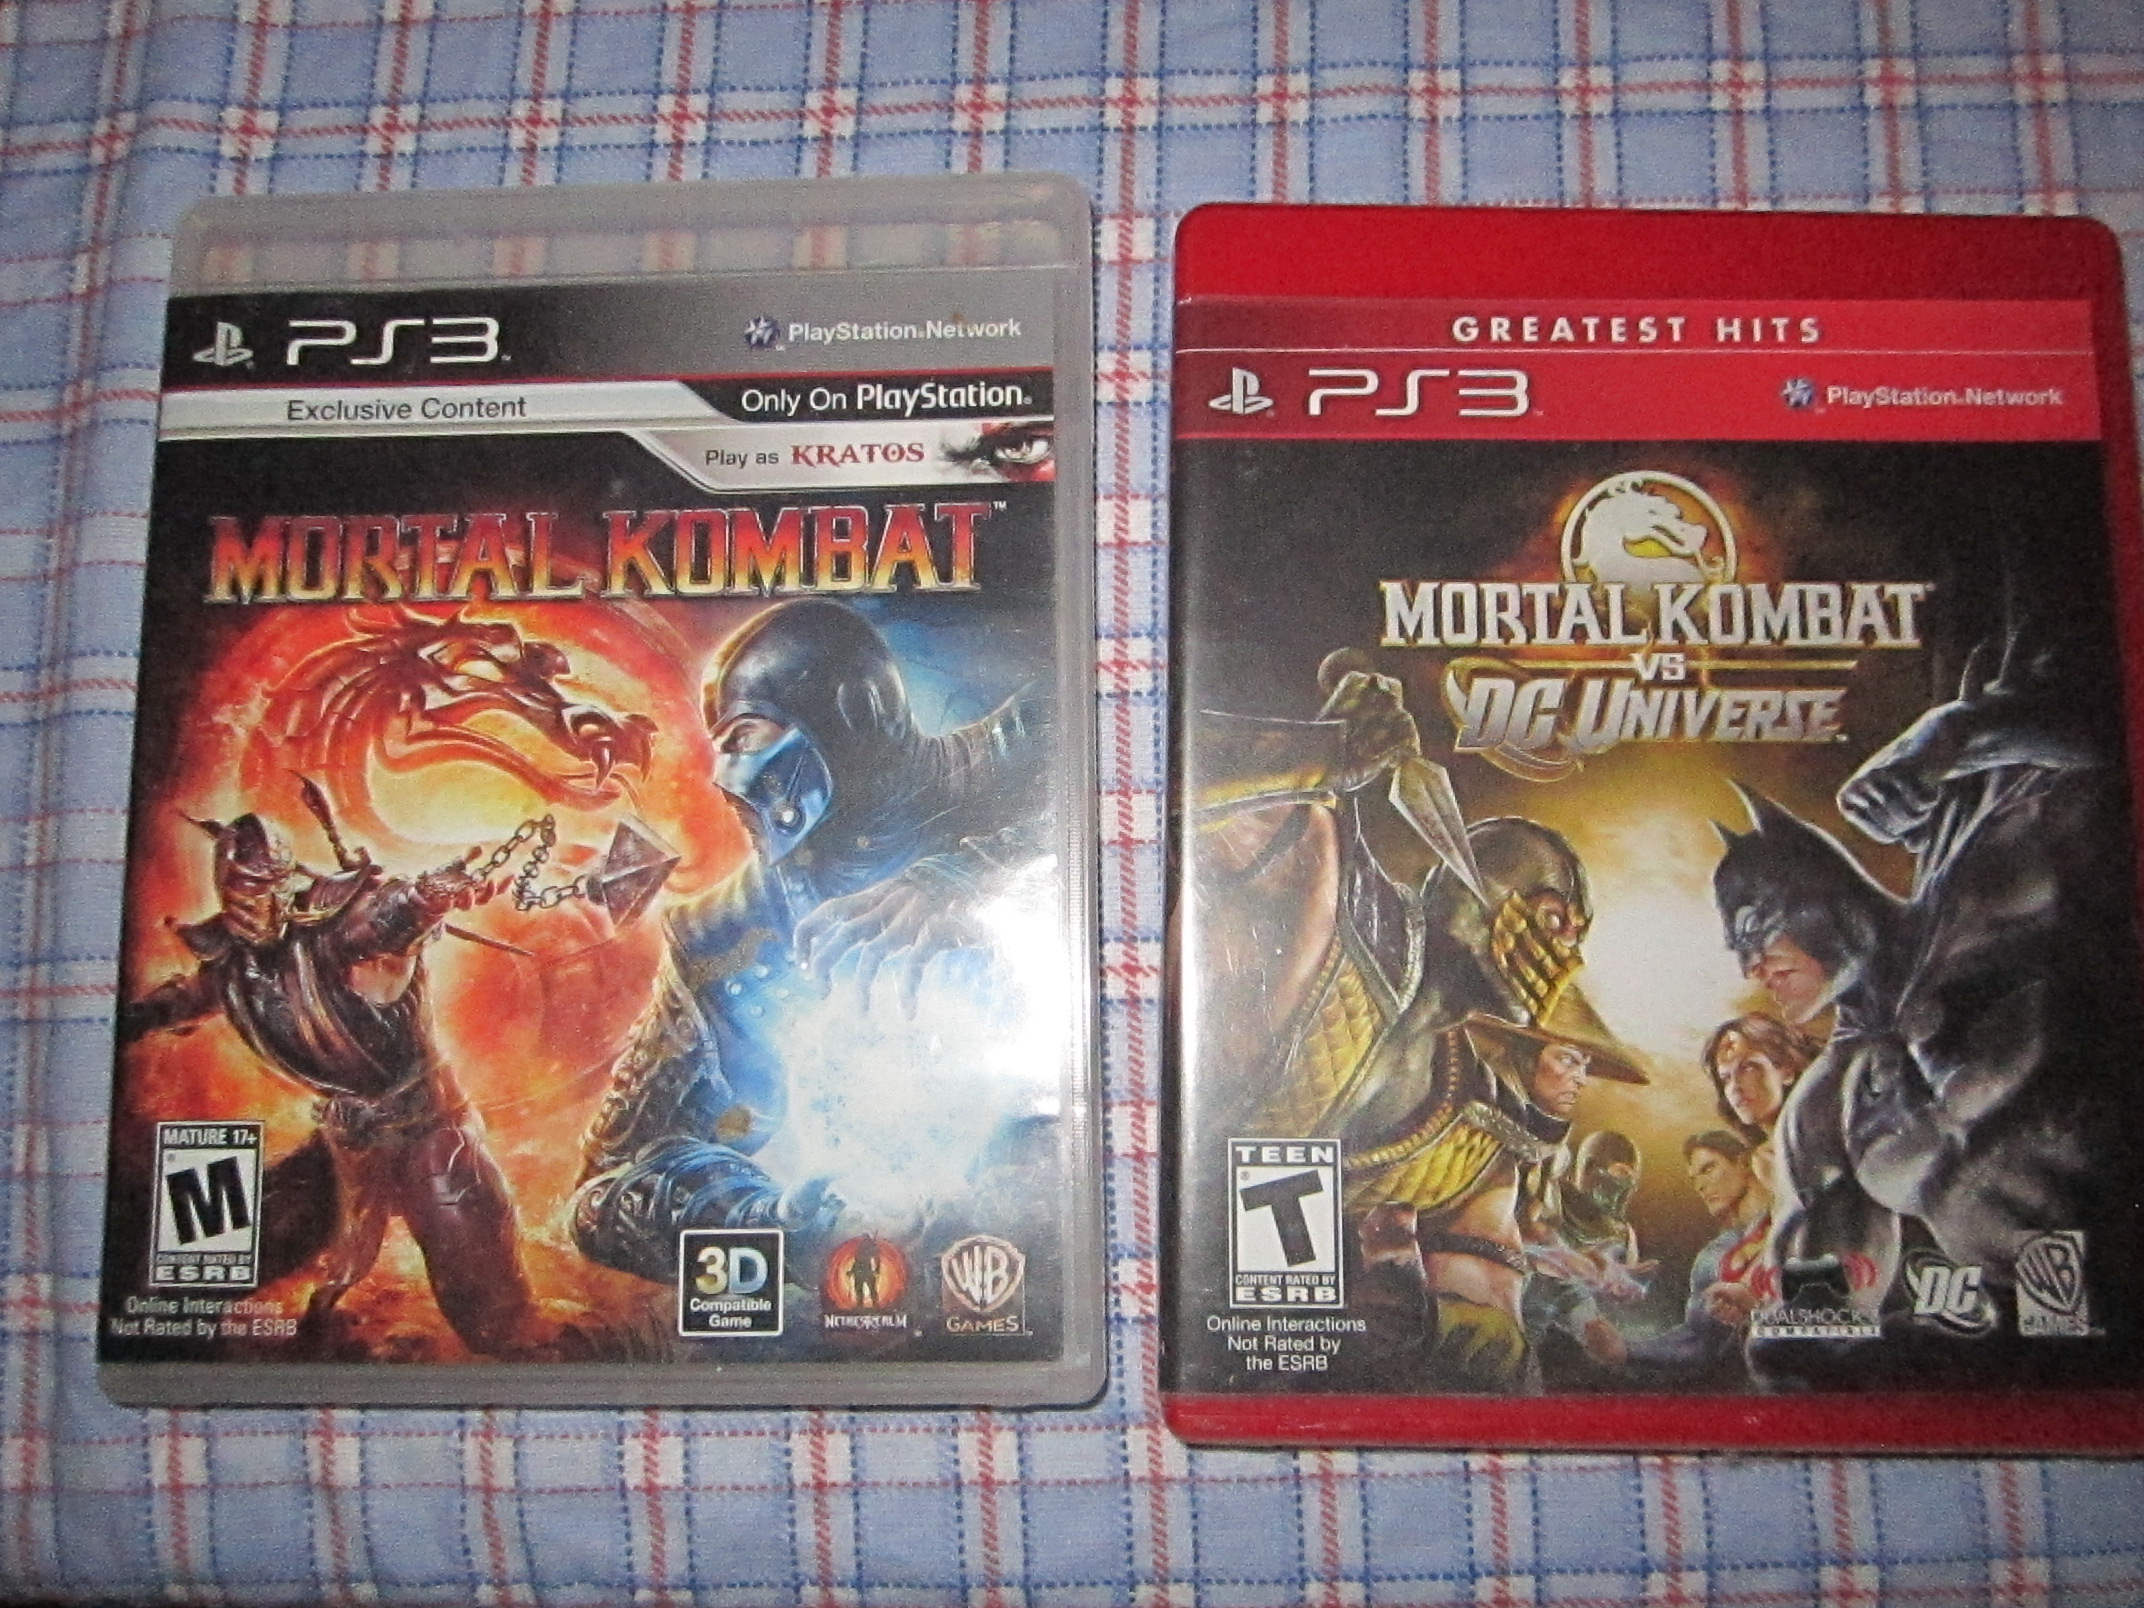 I have always been a fan of Mortal Kombat!